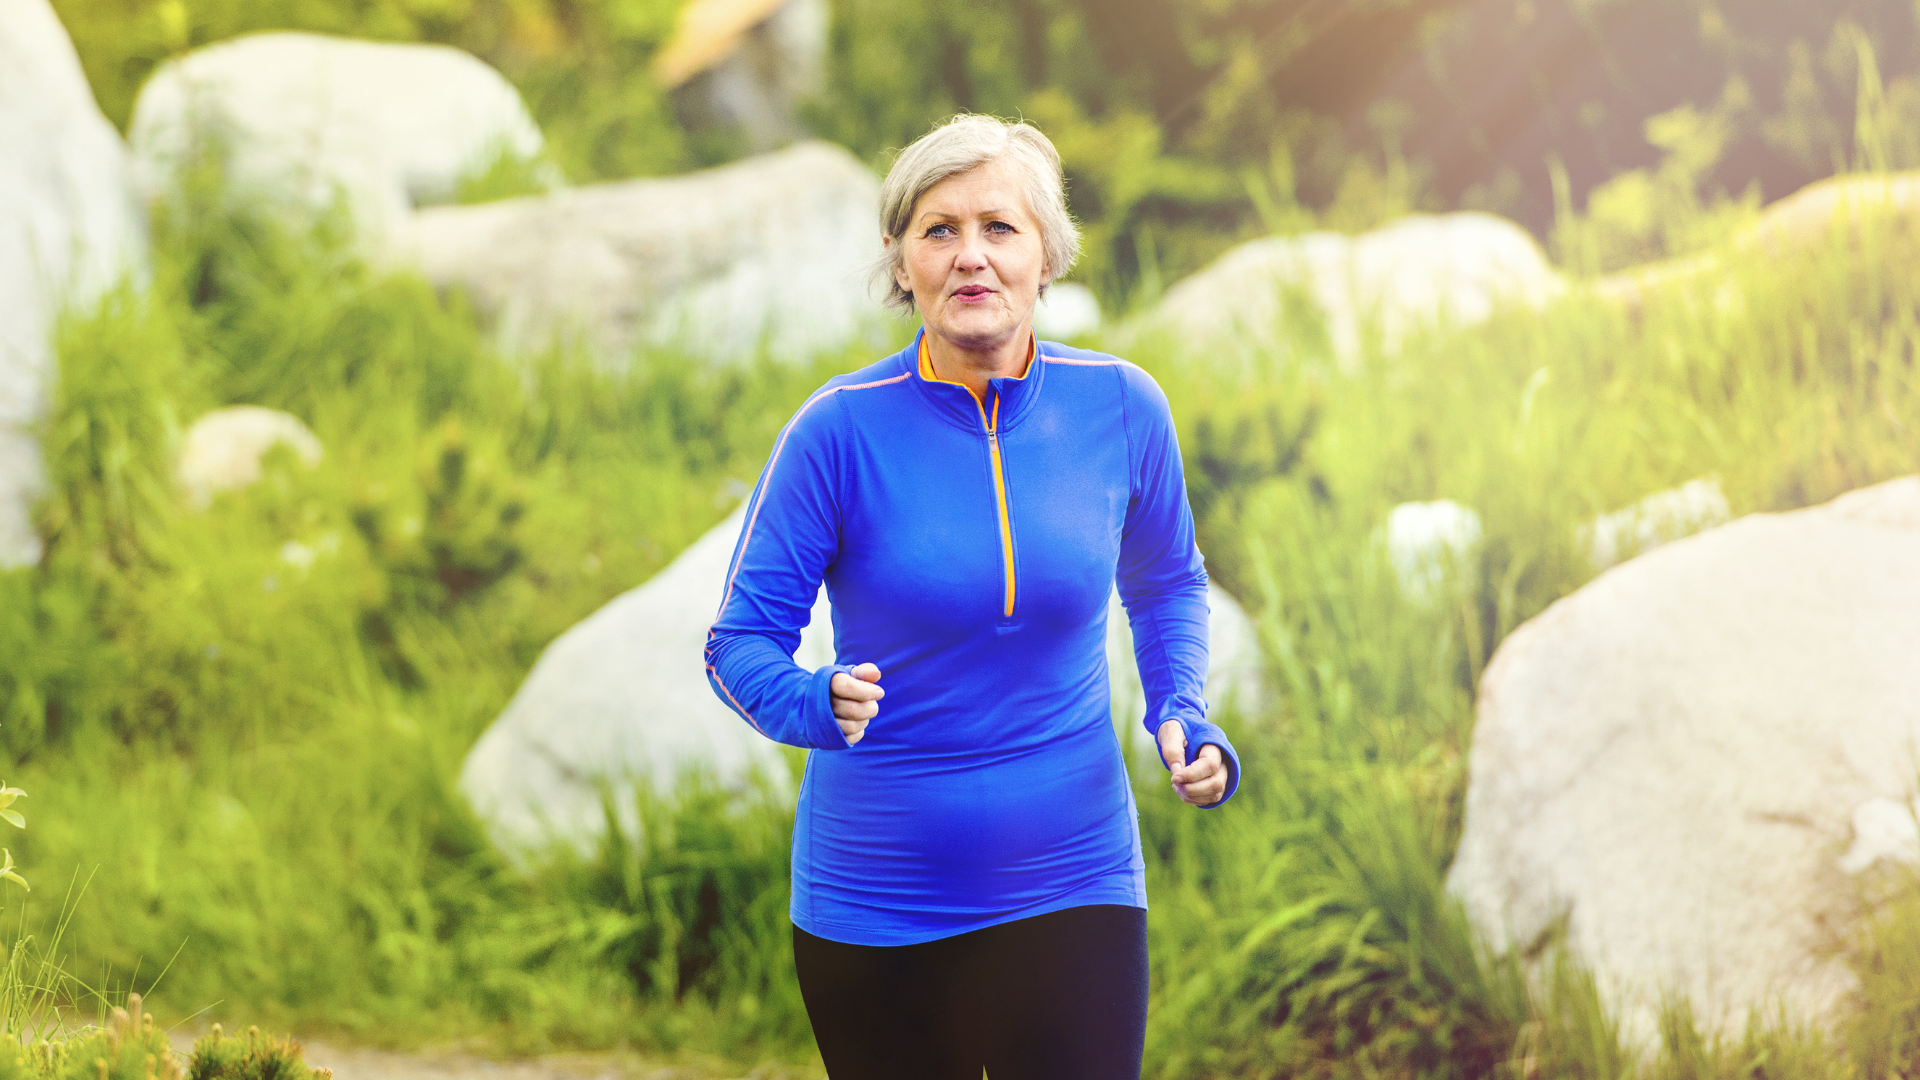 White woman aged 55-65 running